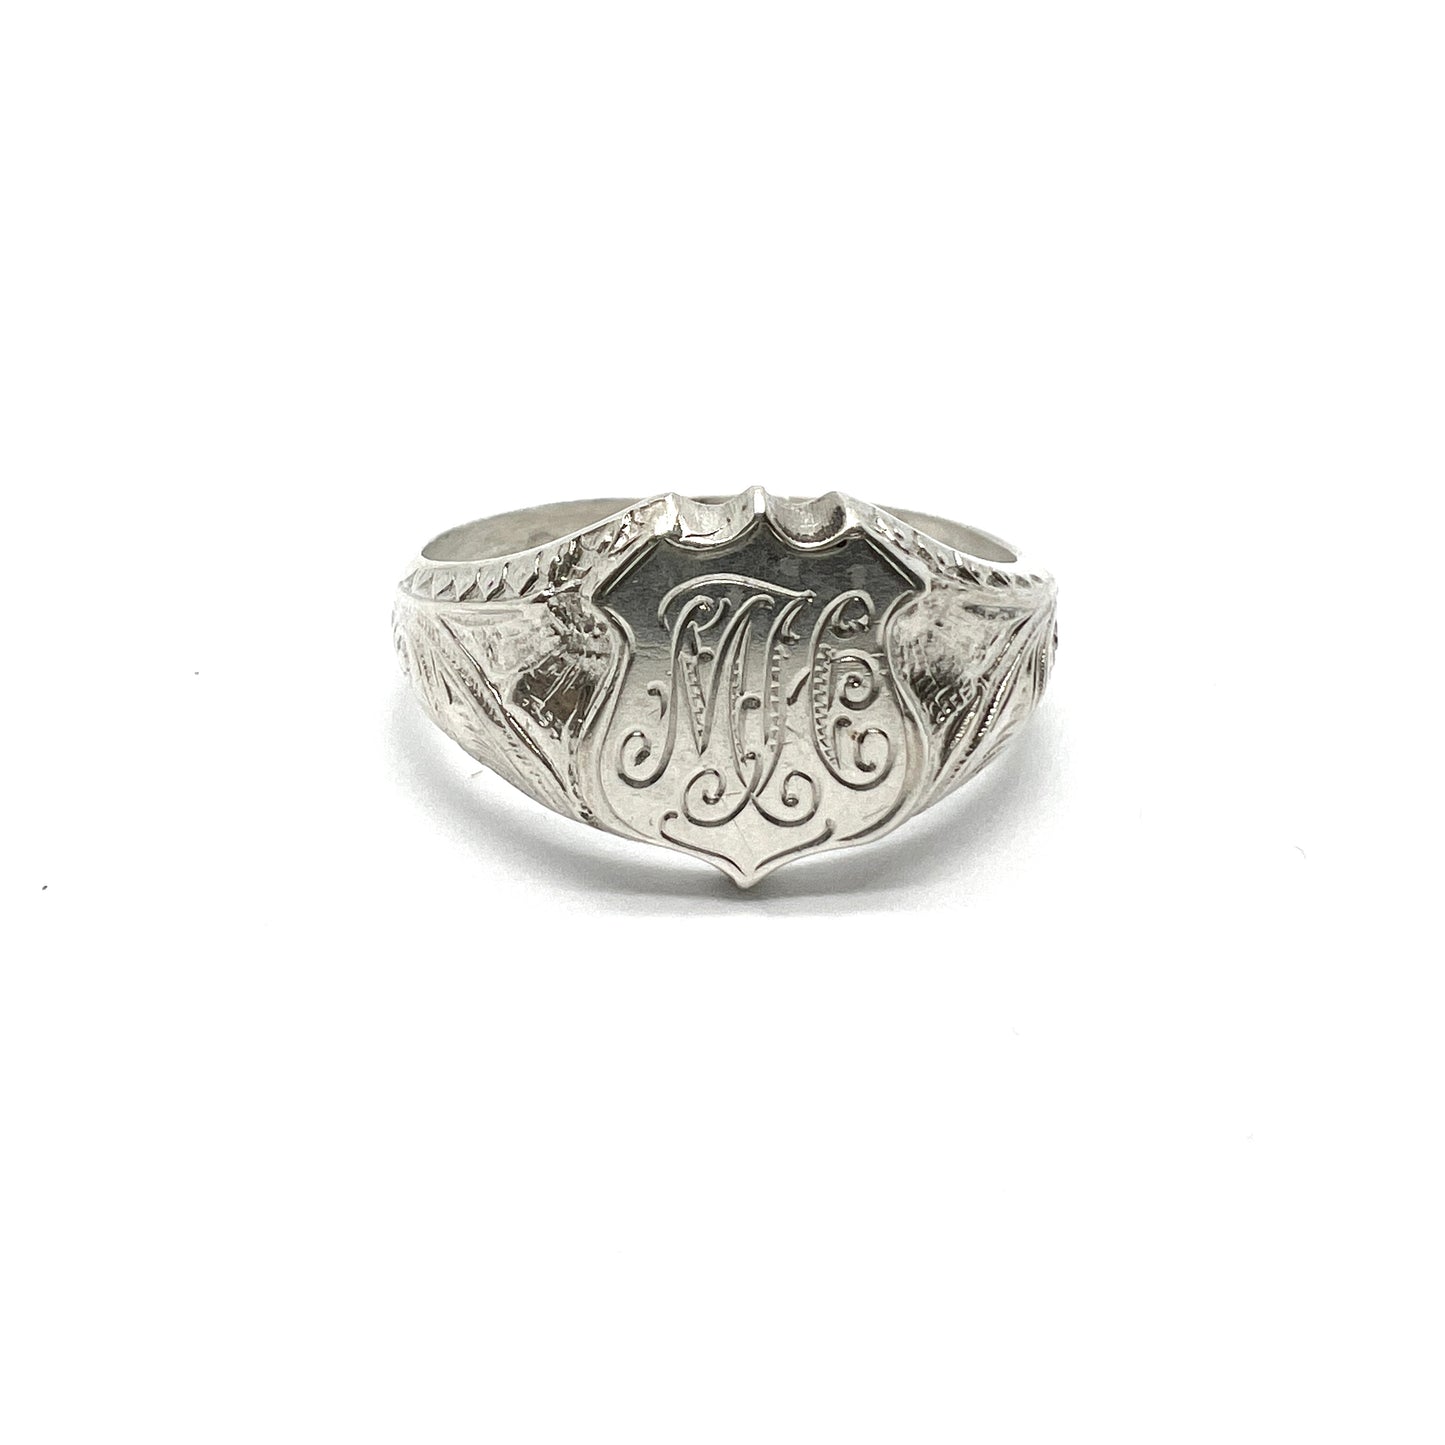 Turun Jalometalli Oy, Finland 1947 Vintage Solid Silver Men's Signet Ring. MH